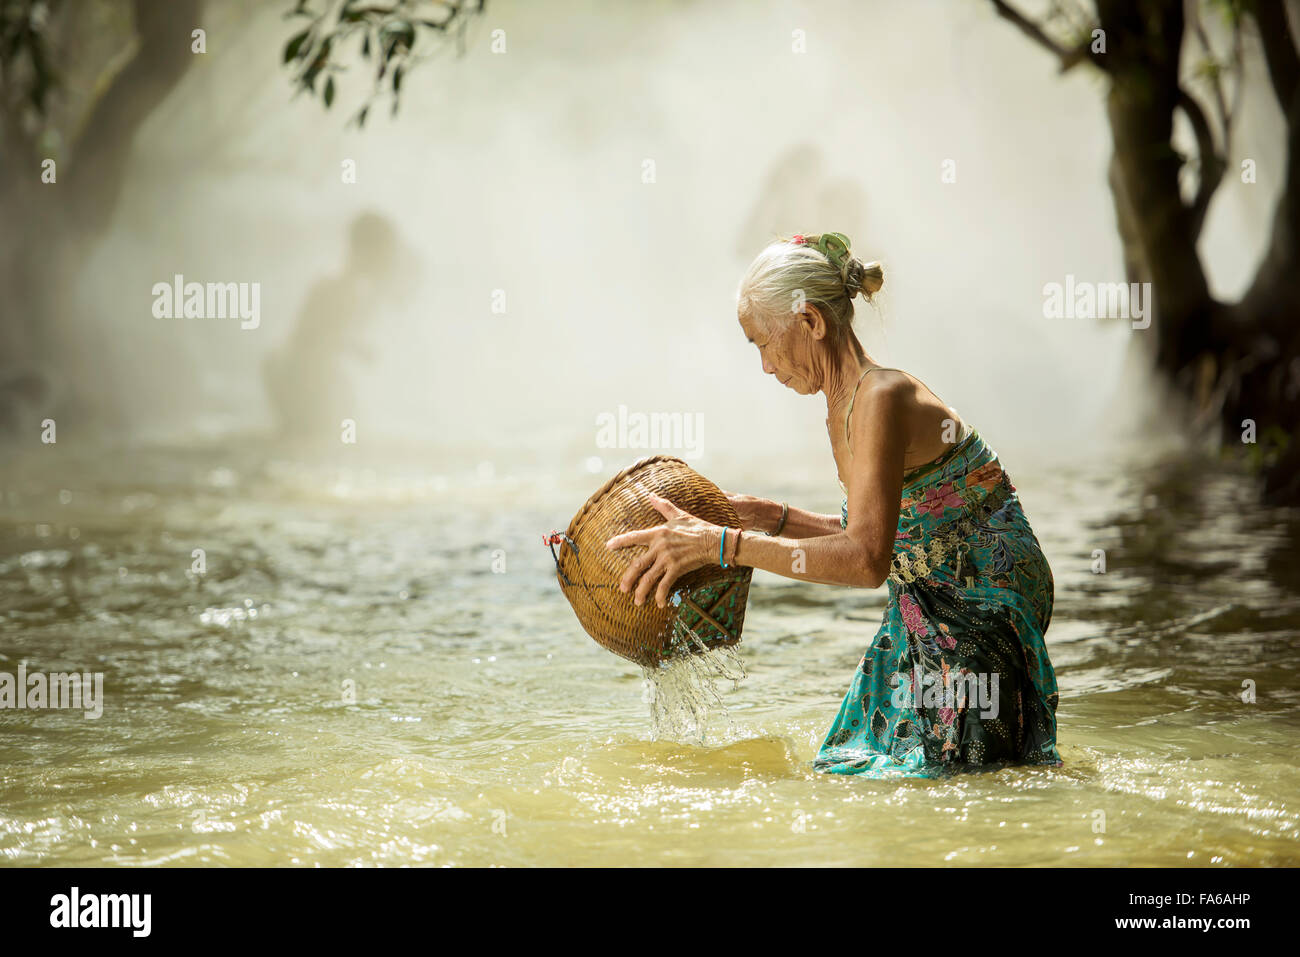 Senior woman fishing in streams Stock Photo